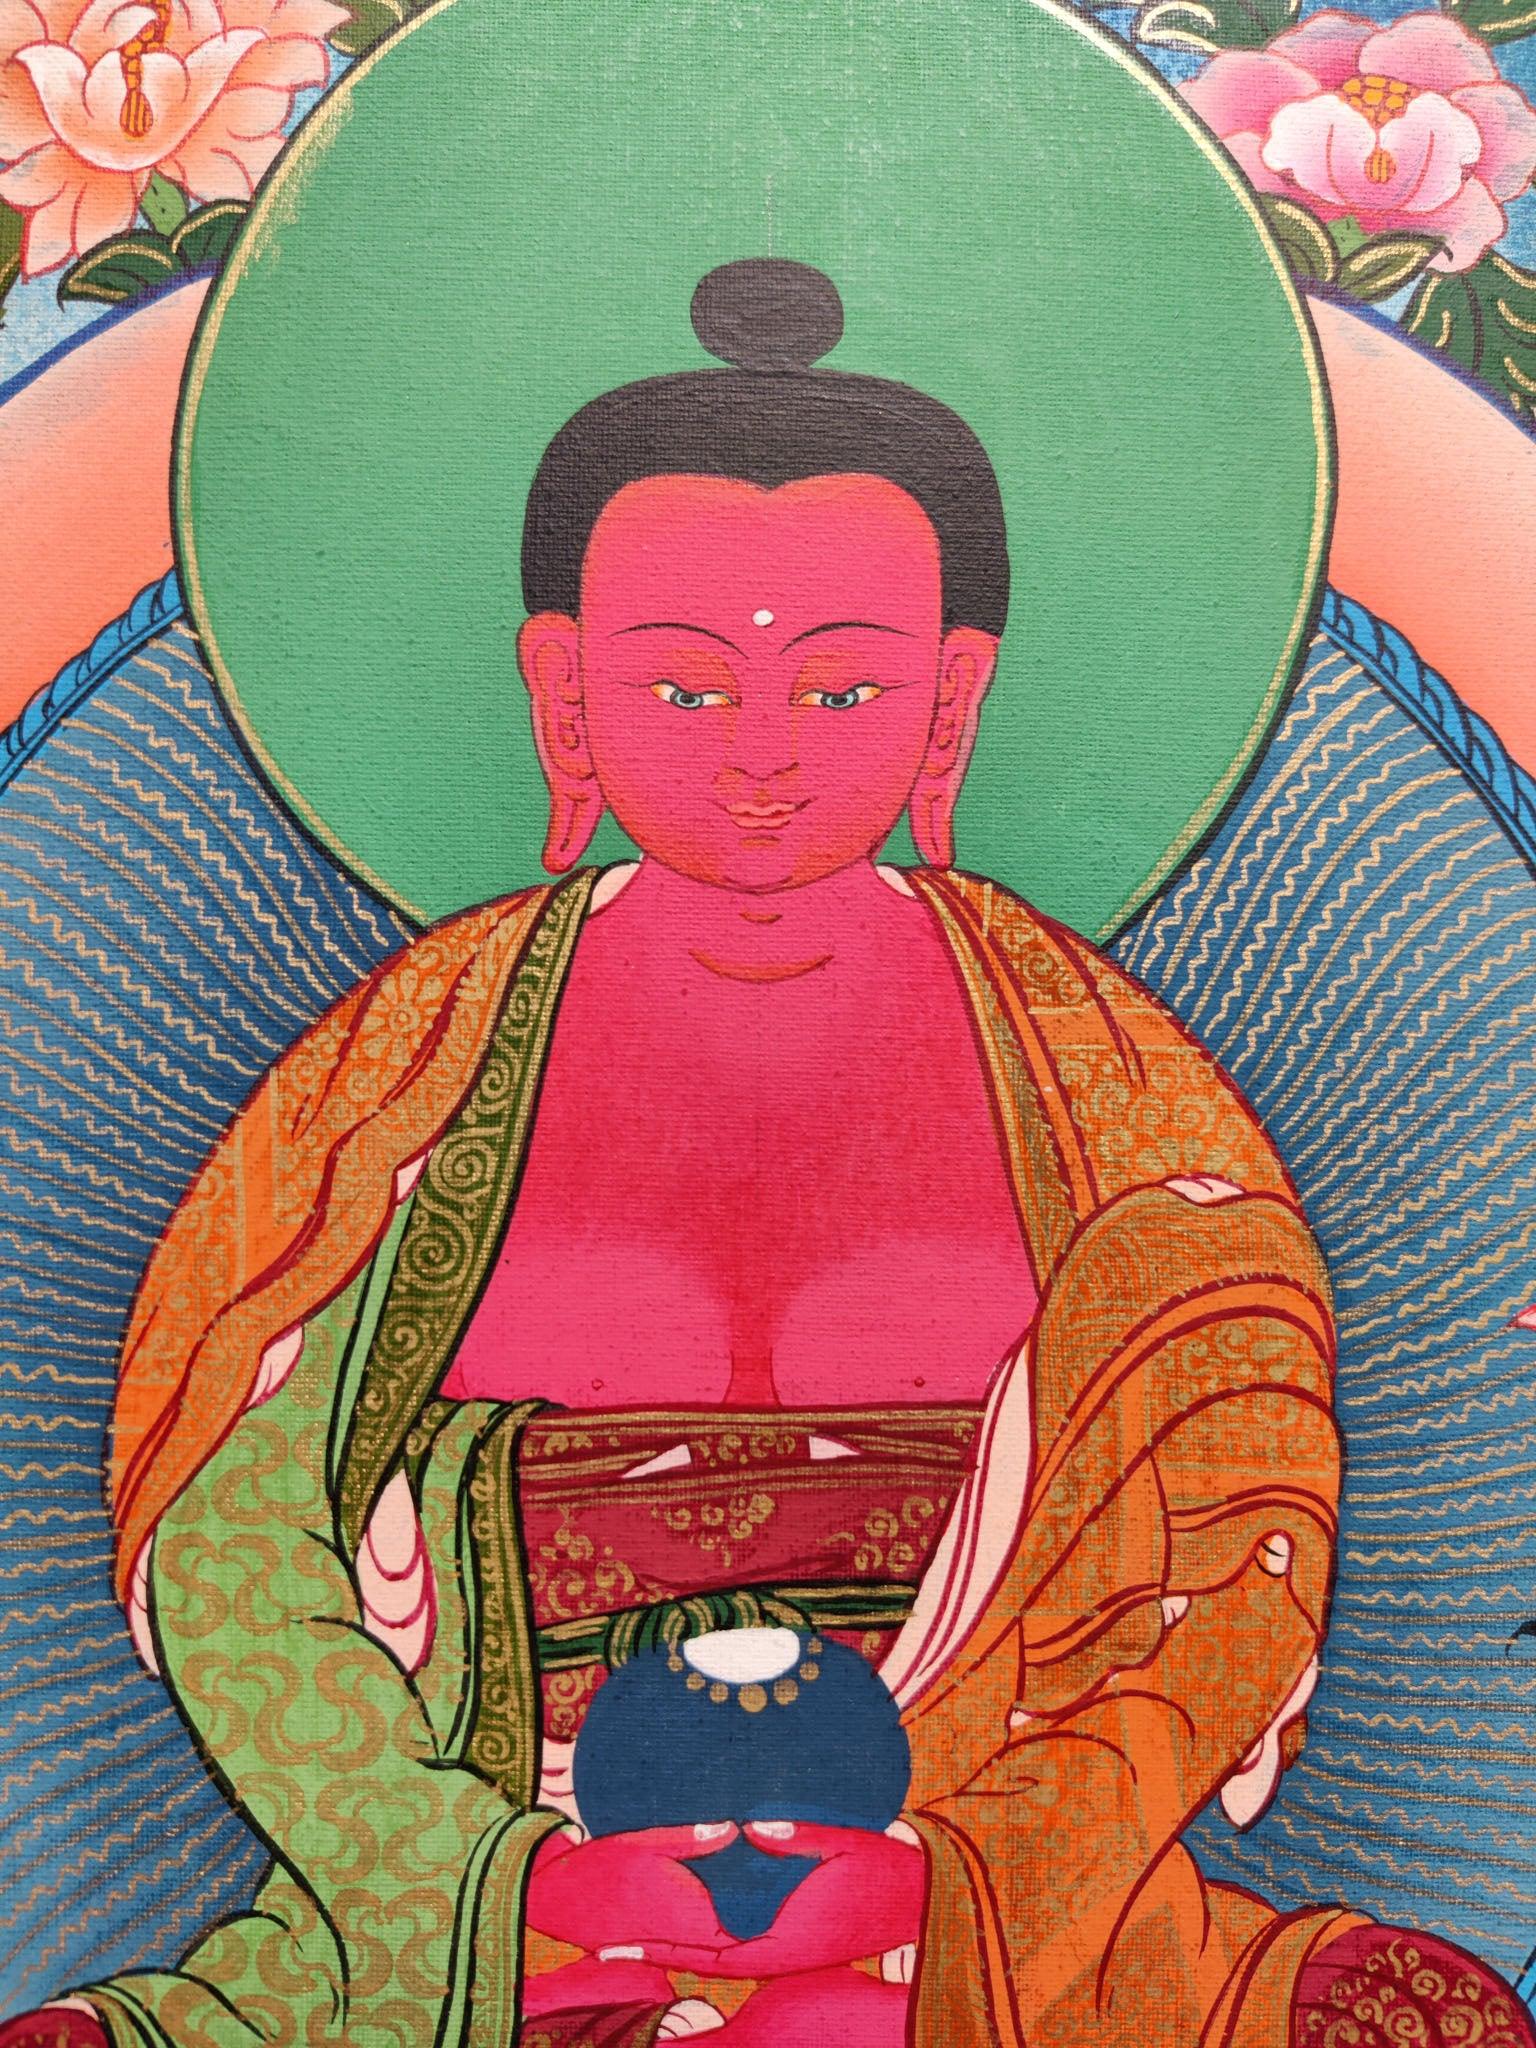 Namo Amitabha Buddha Thangka